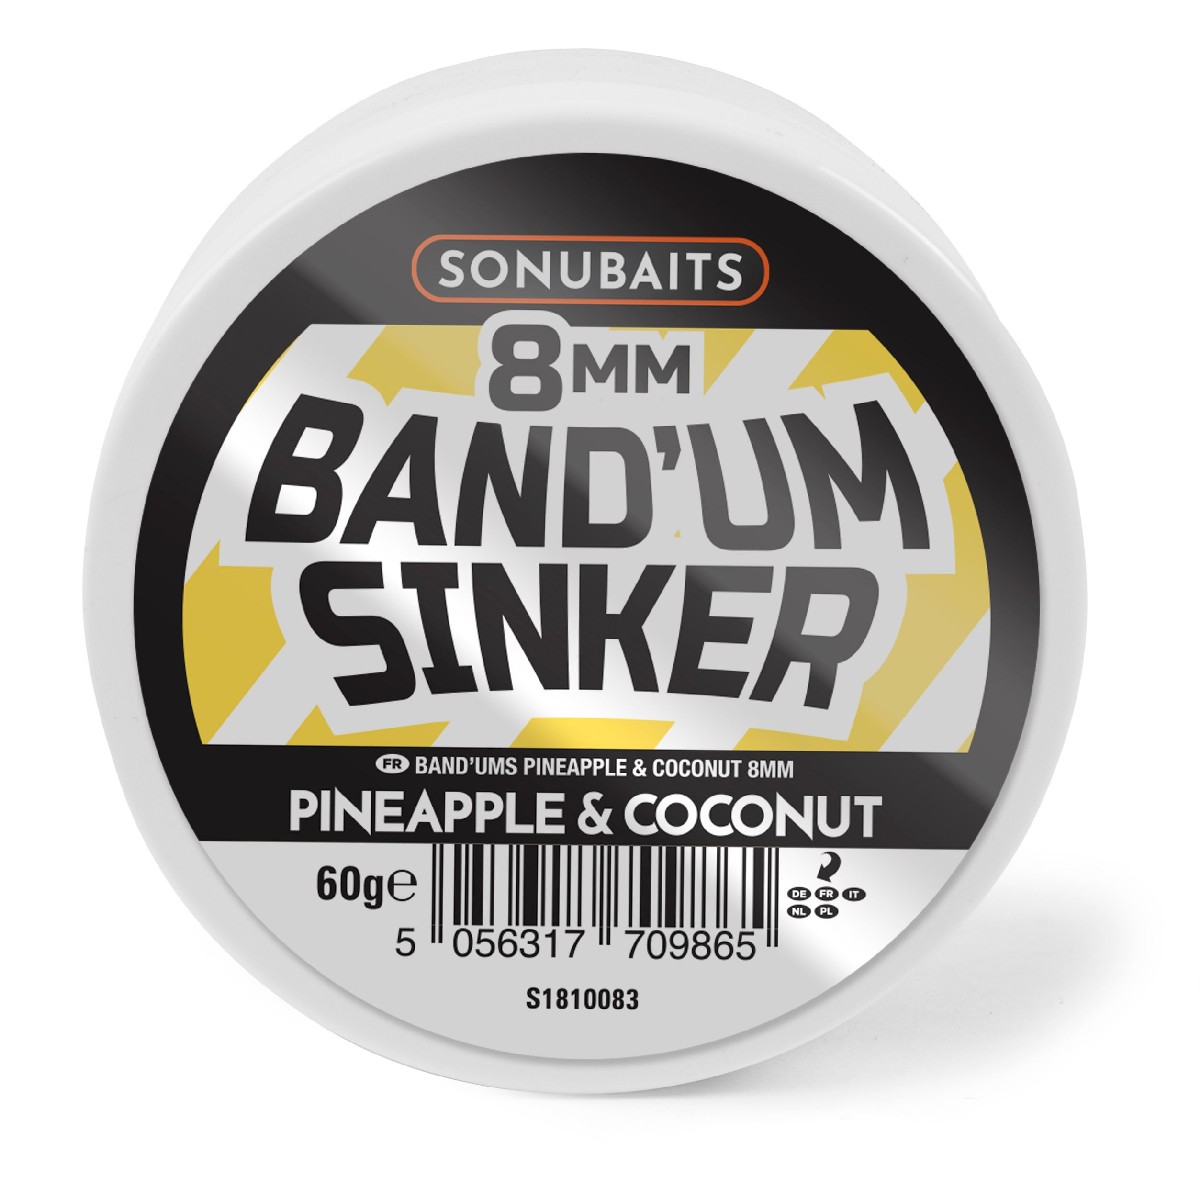 Sonubaits Band'Um Sinker 6mm Pineapple & Coconut